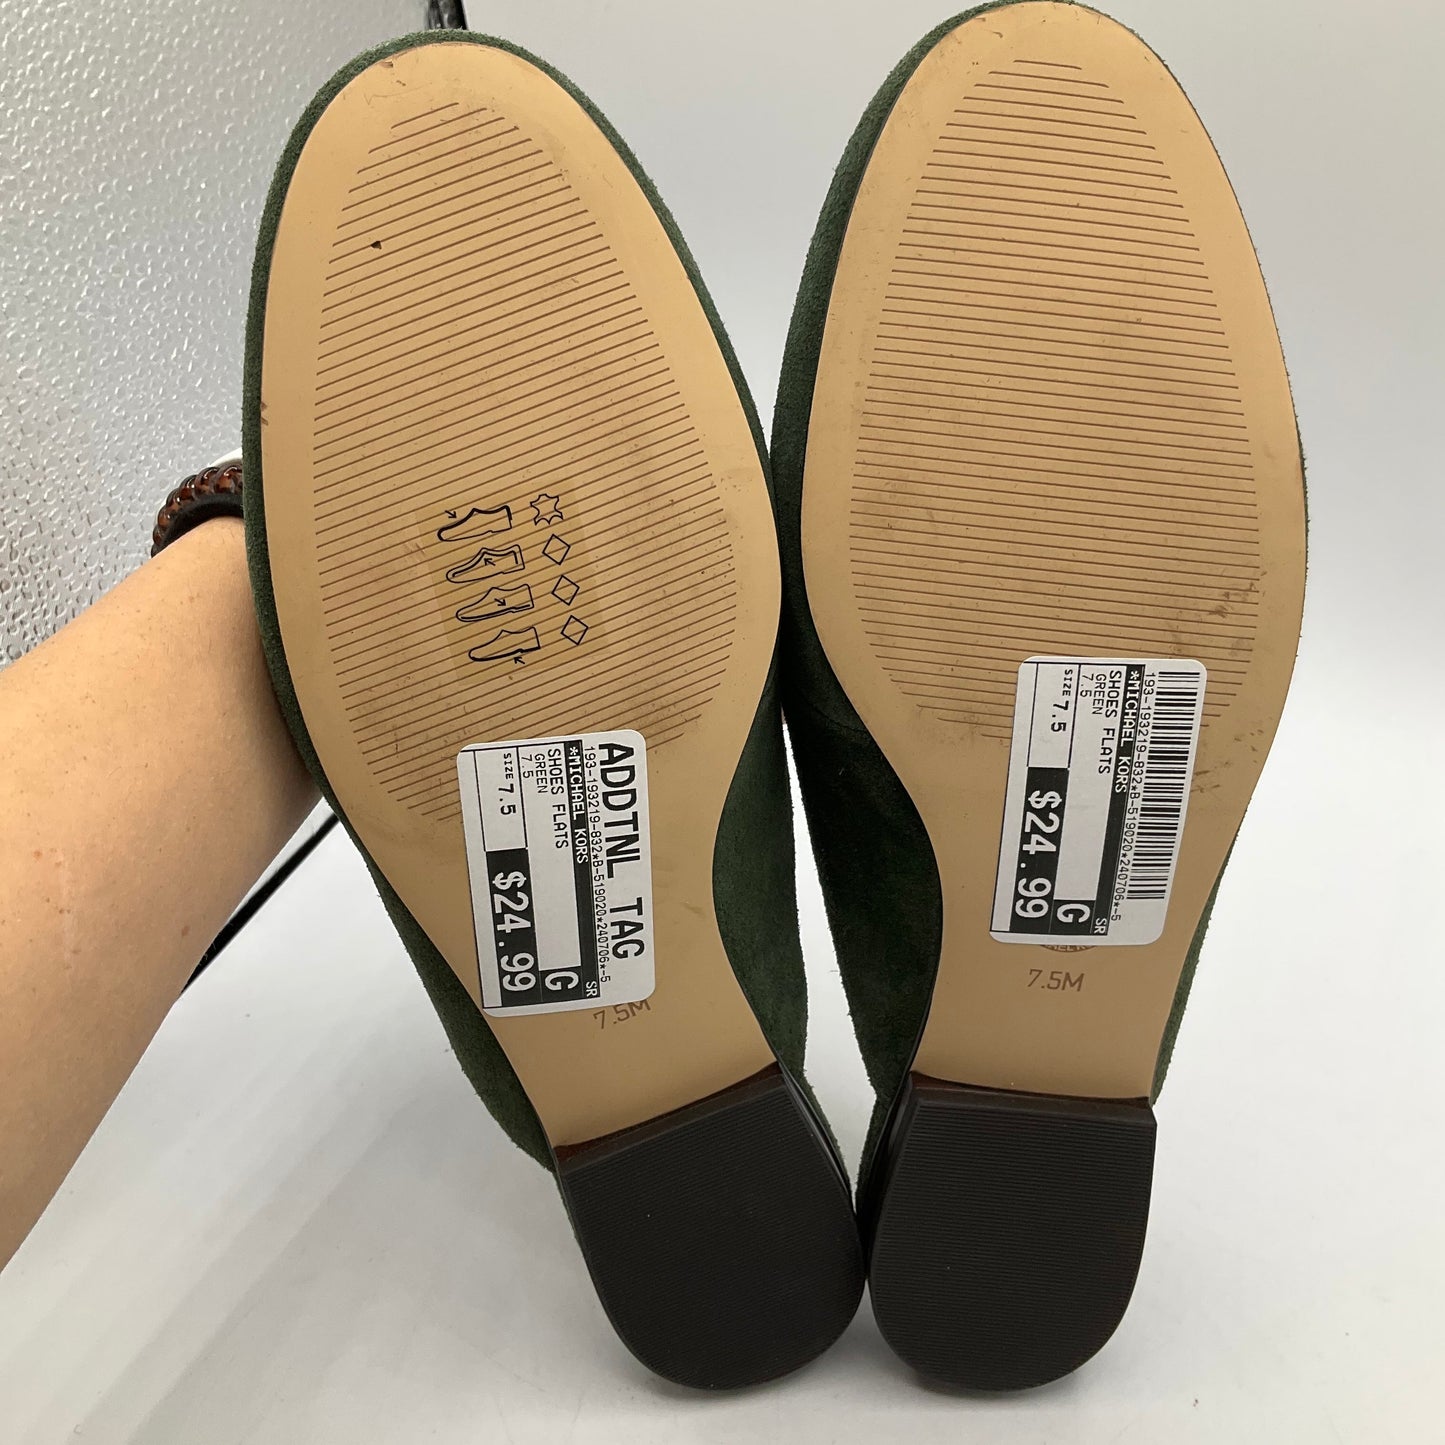 Green Shoes Flats Michael Kors, Size 7.5